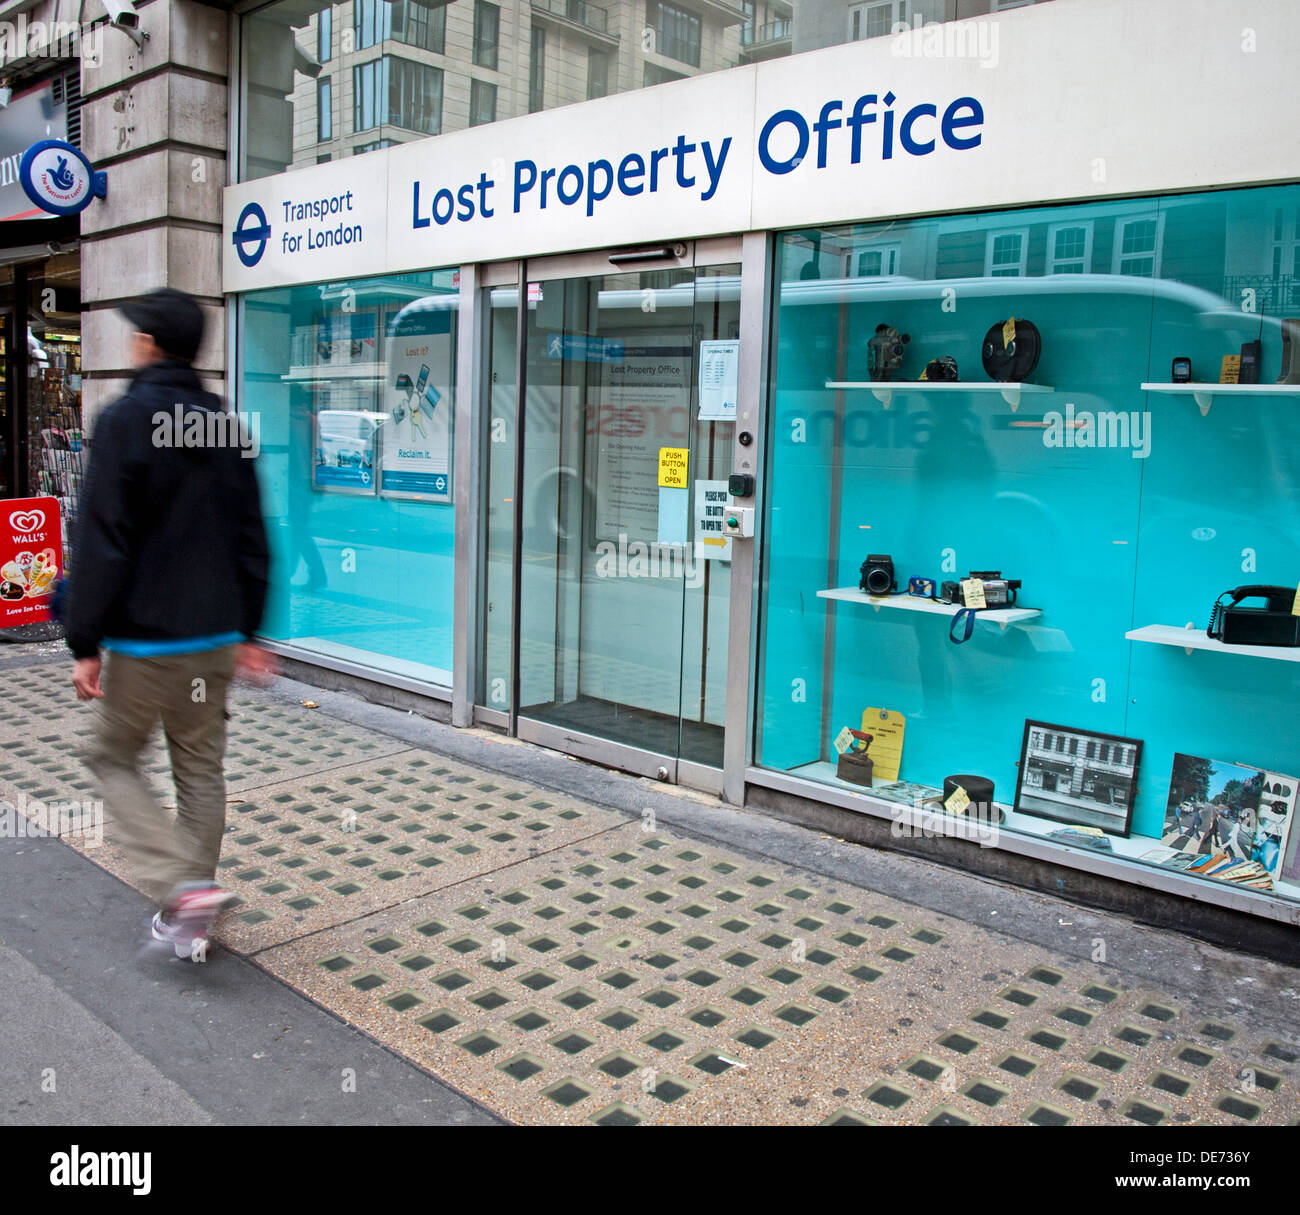 Transport for London Lost Property Office, Baker Street, London, England,  United Kingdom Stock Photo - Alamy